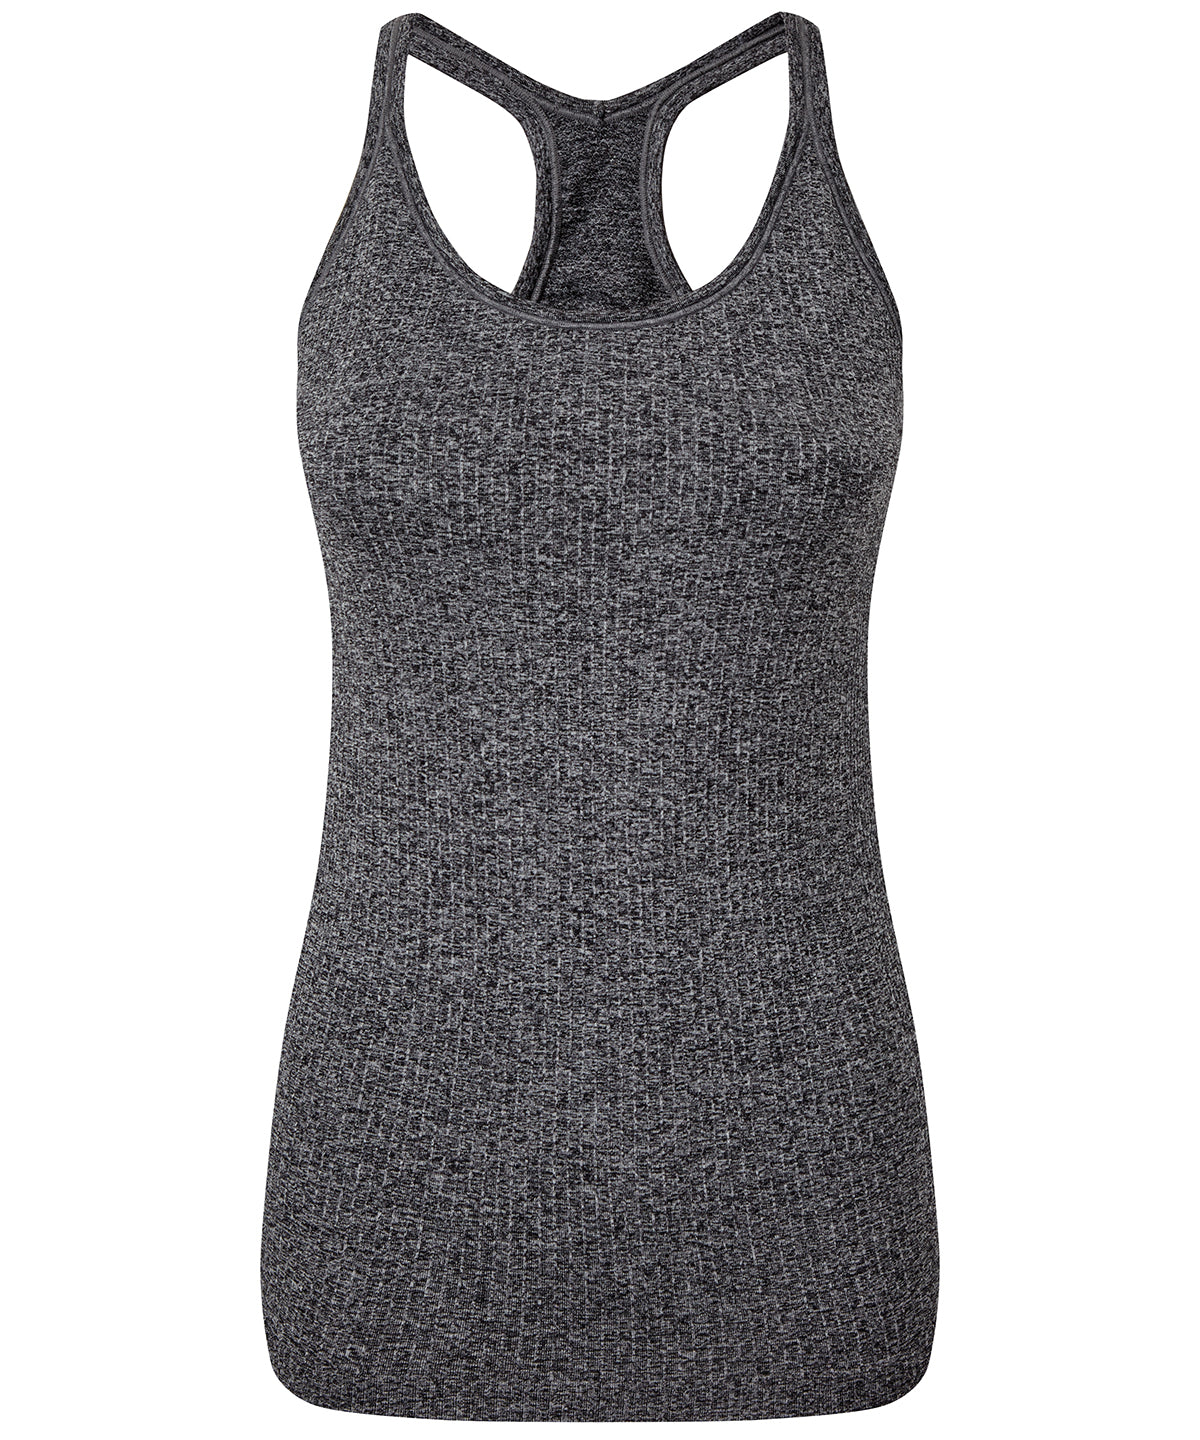 Vesti - Women's TriDri® Seamless '3D Fit' Multi-sport Sculpt Vest With Secret Support